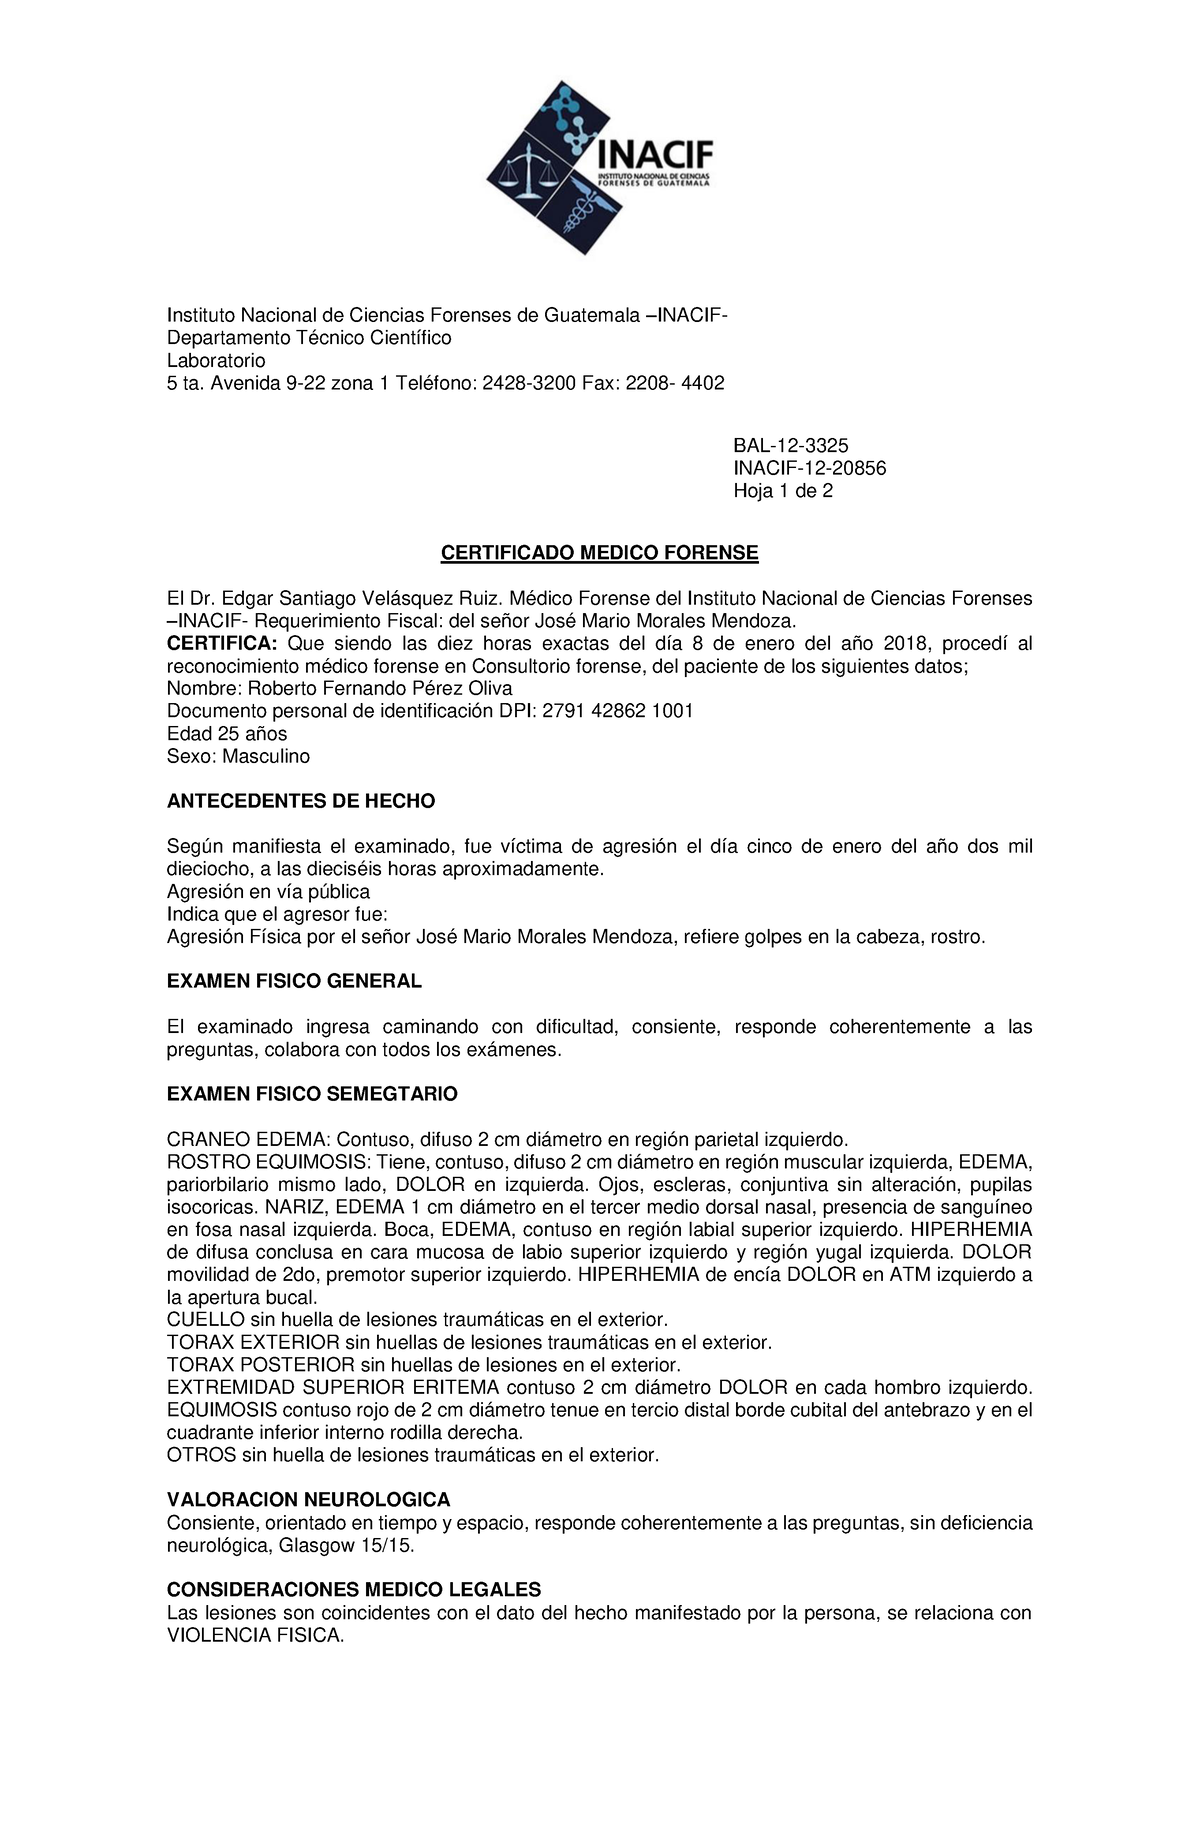 384284185 Informe Medico Forense Instituto Nacional De Ciencias Forenses De Guatemala Inacif 5917